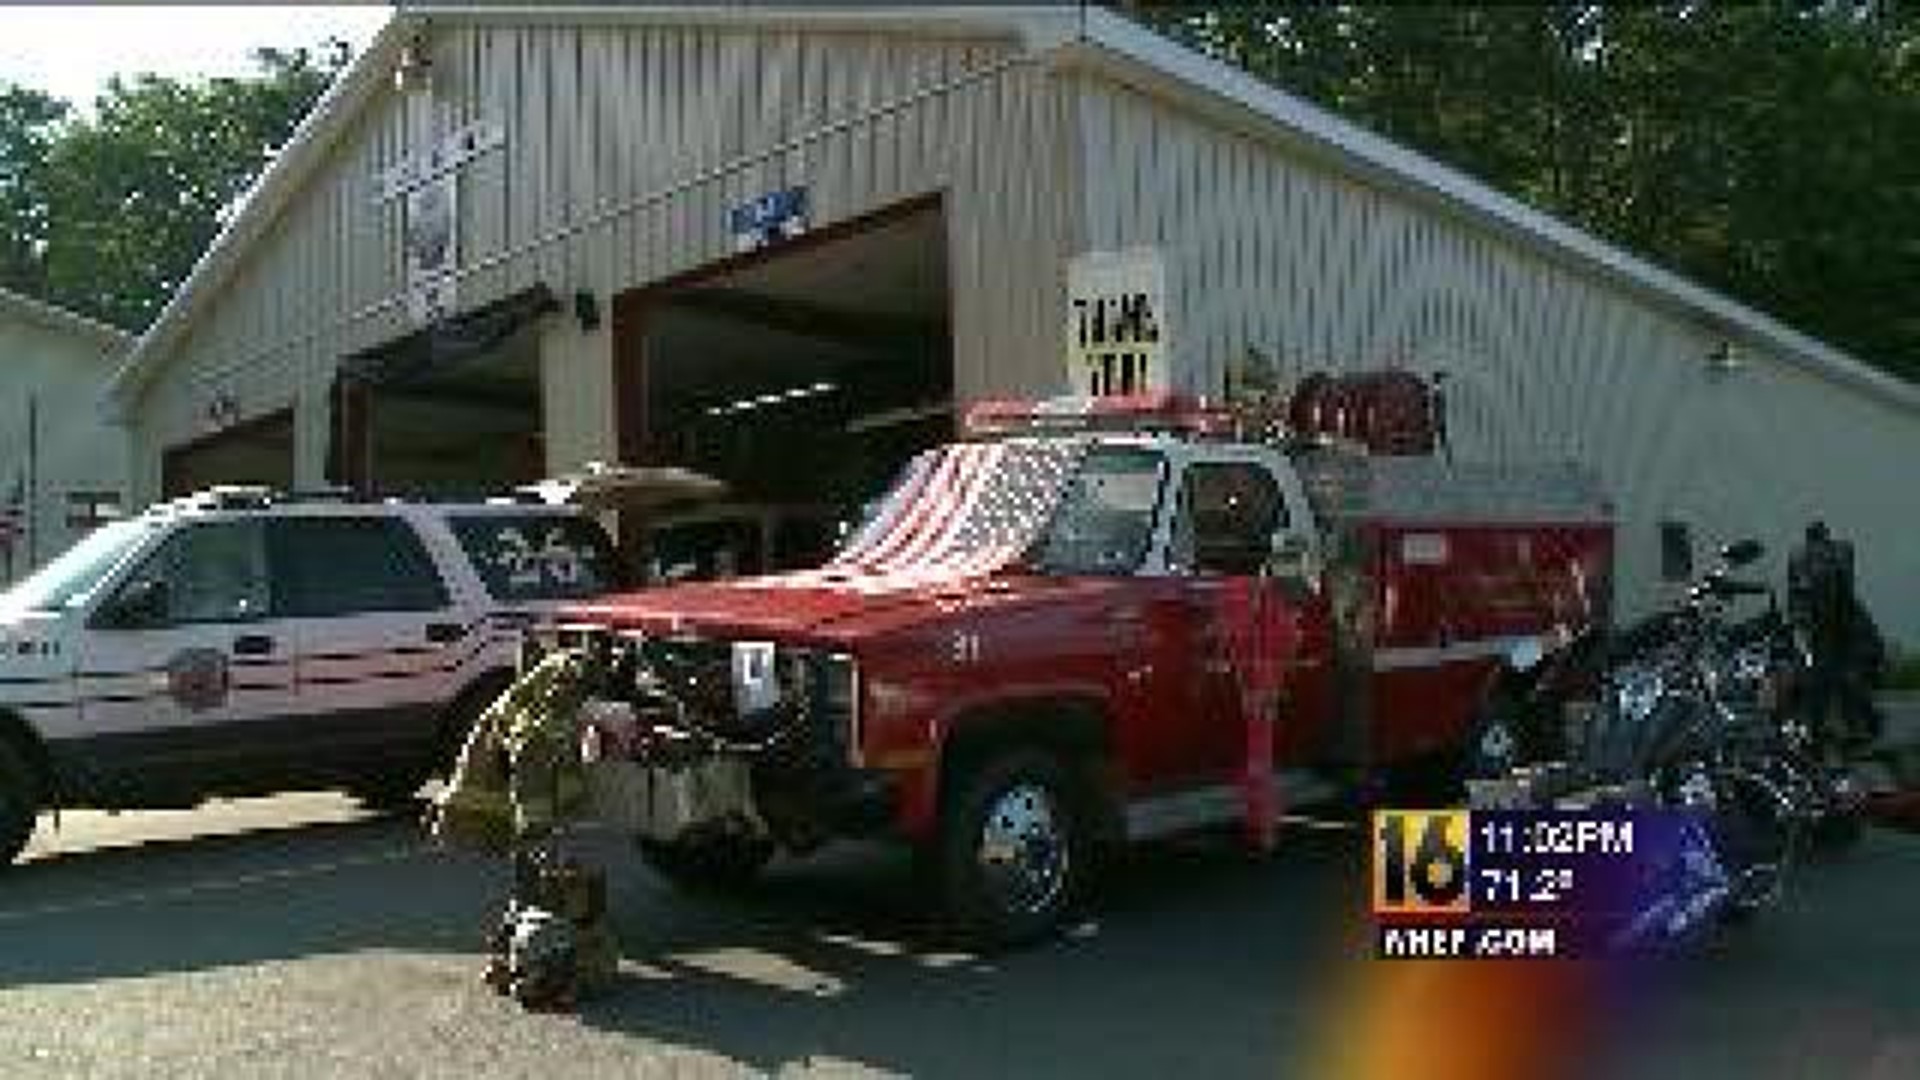 Fire Department Aids Family of Fallen Member